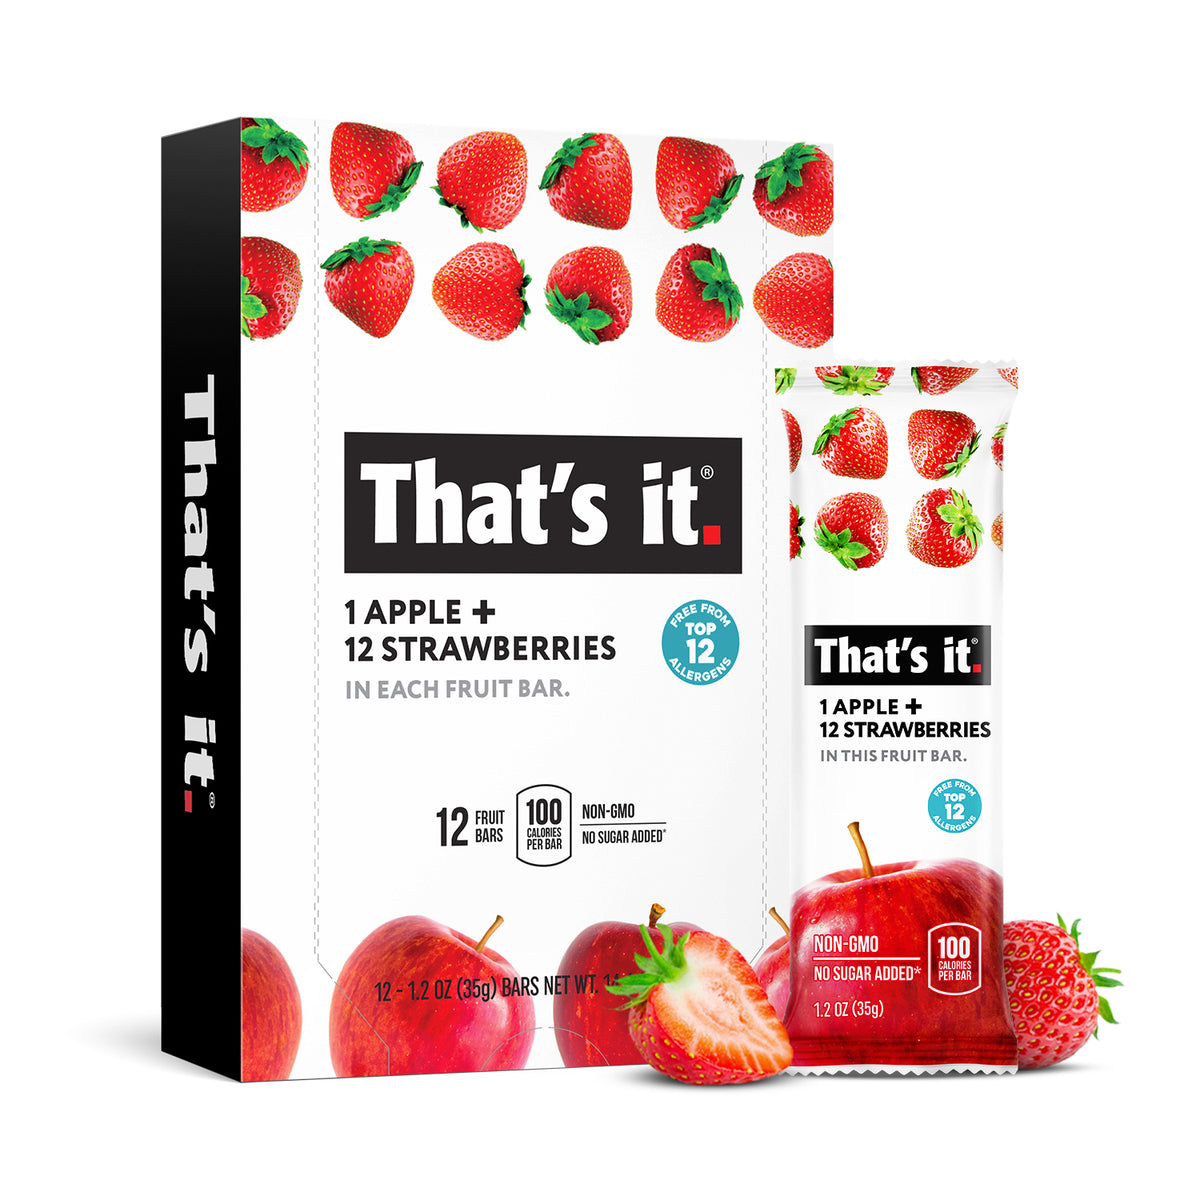 12 count box of Apple + Strawberries plus single bar